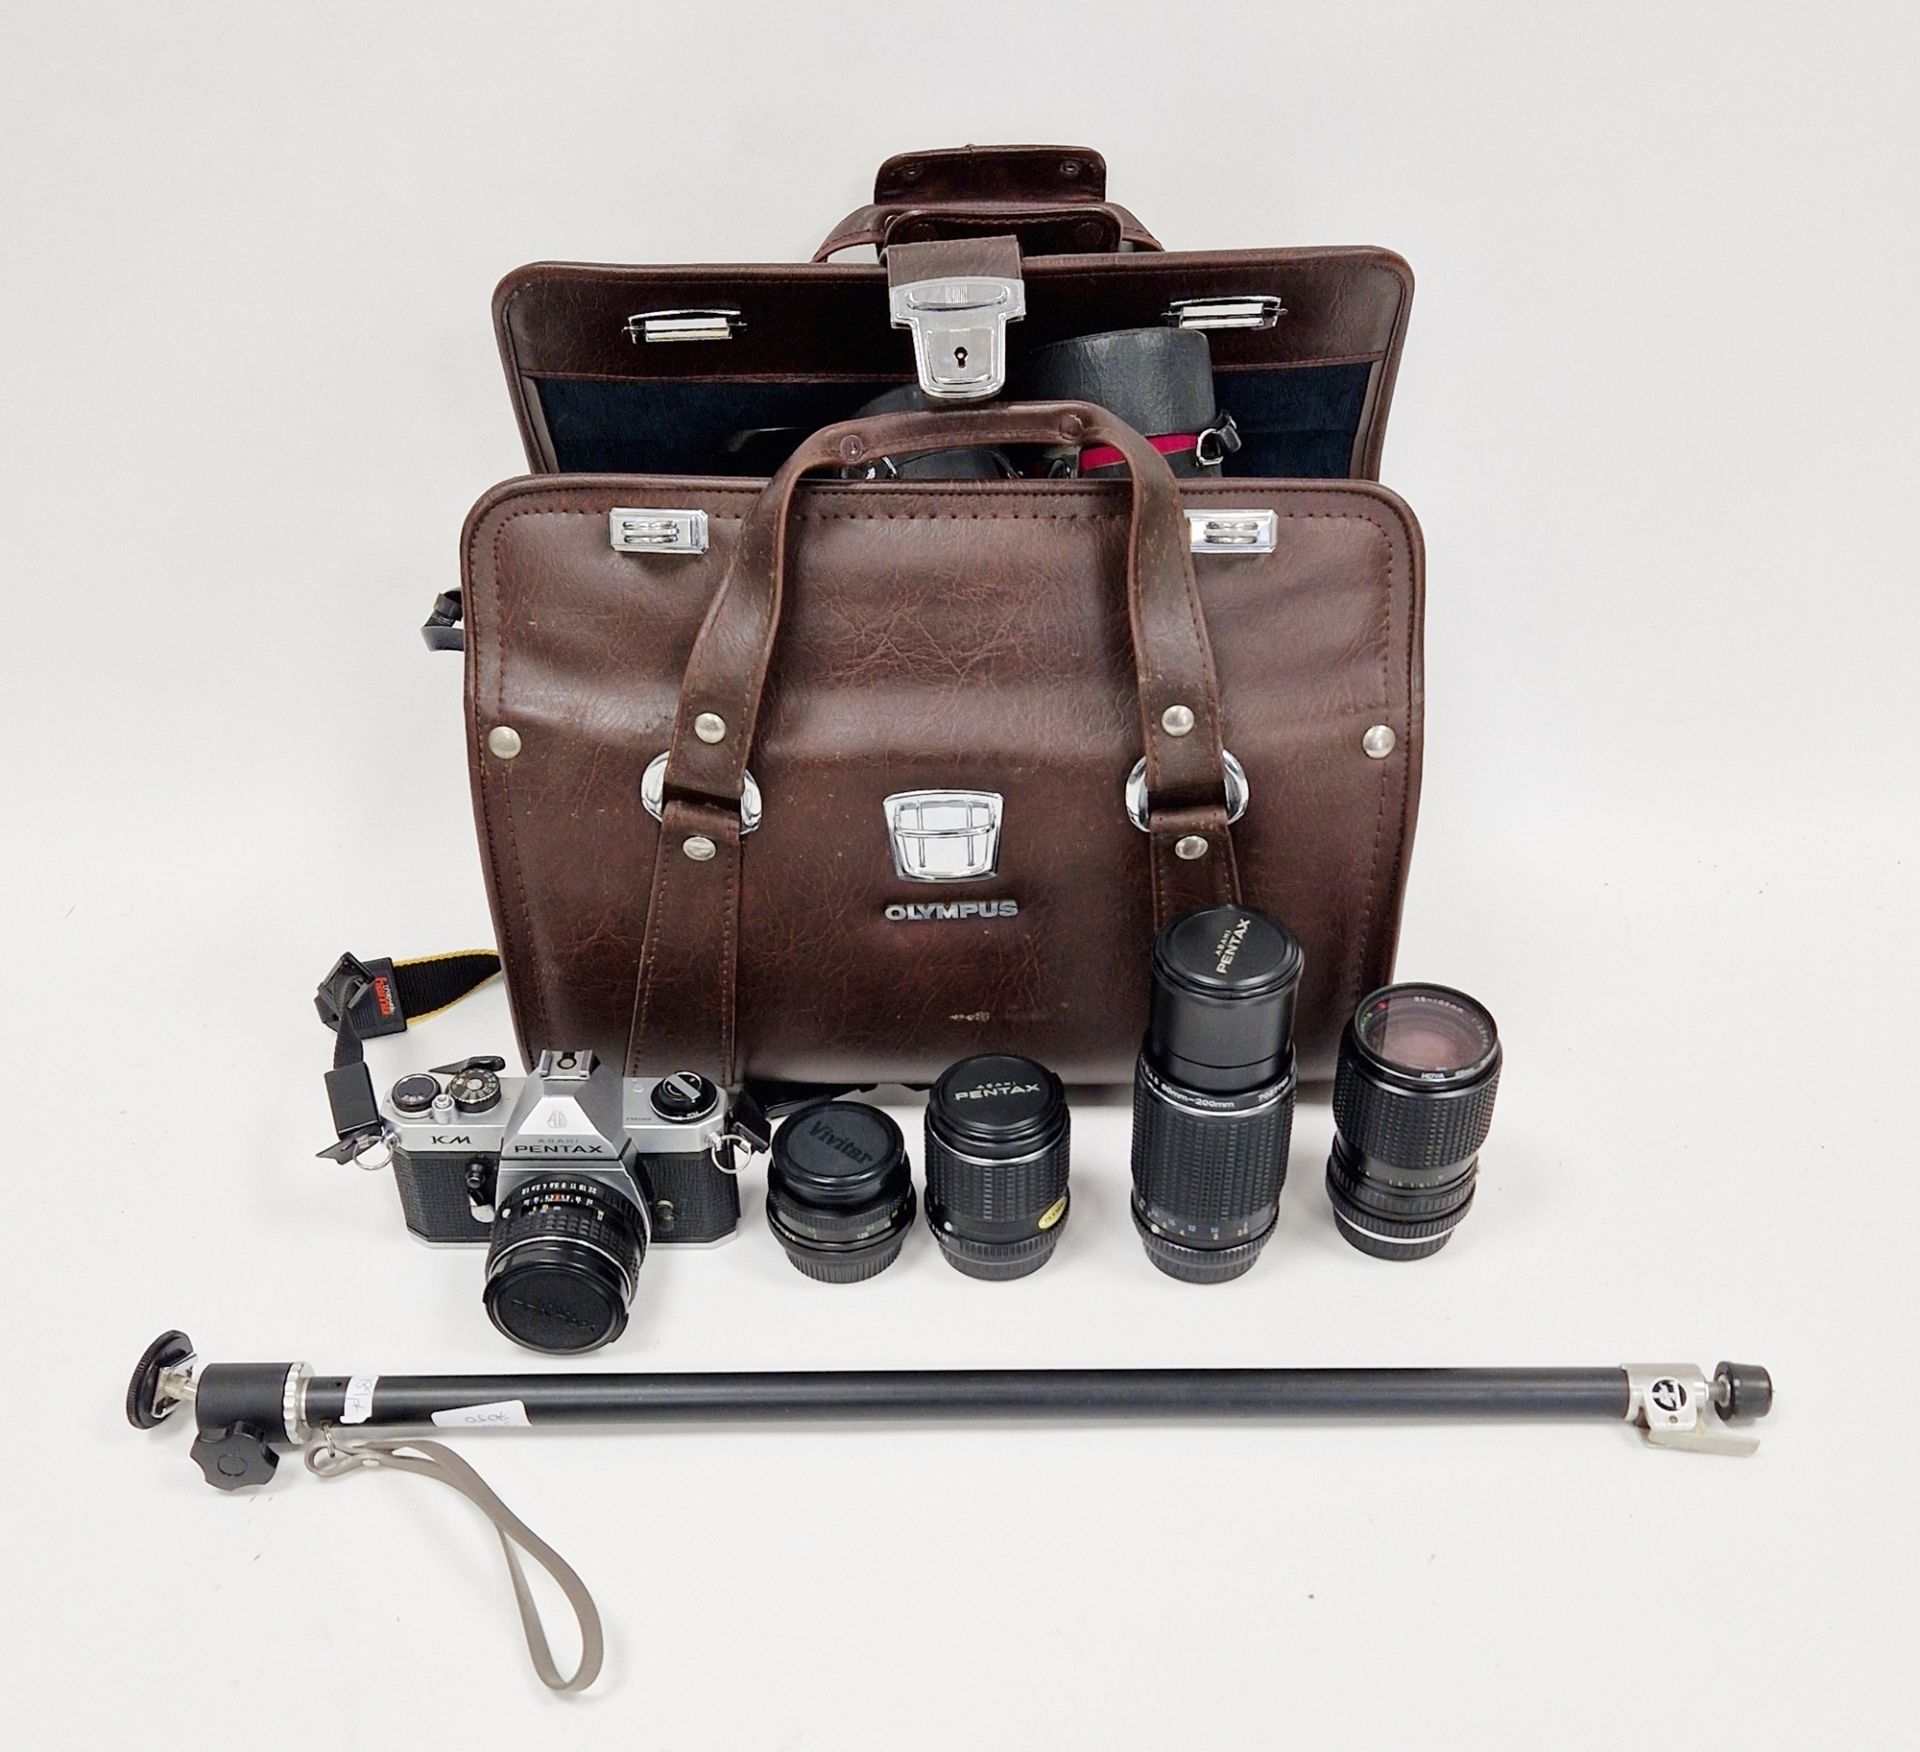 Pentax Asahi KM camera, no.8107043 and various lenses and camera monopole - Image 2 of 2